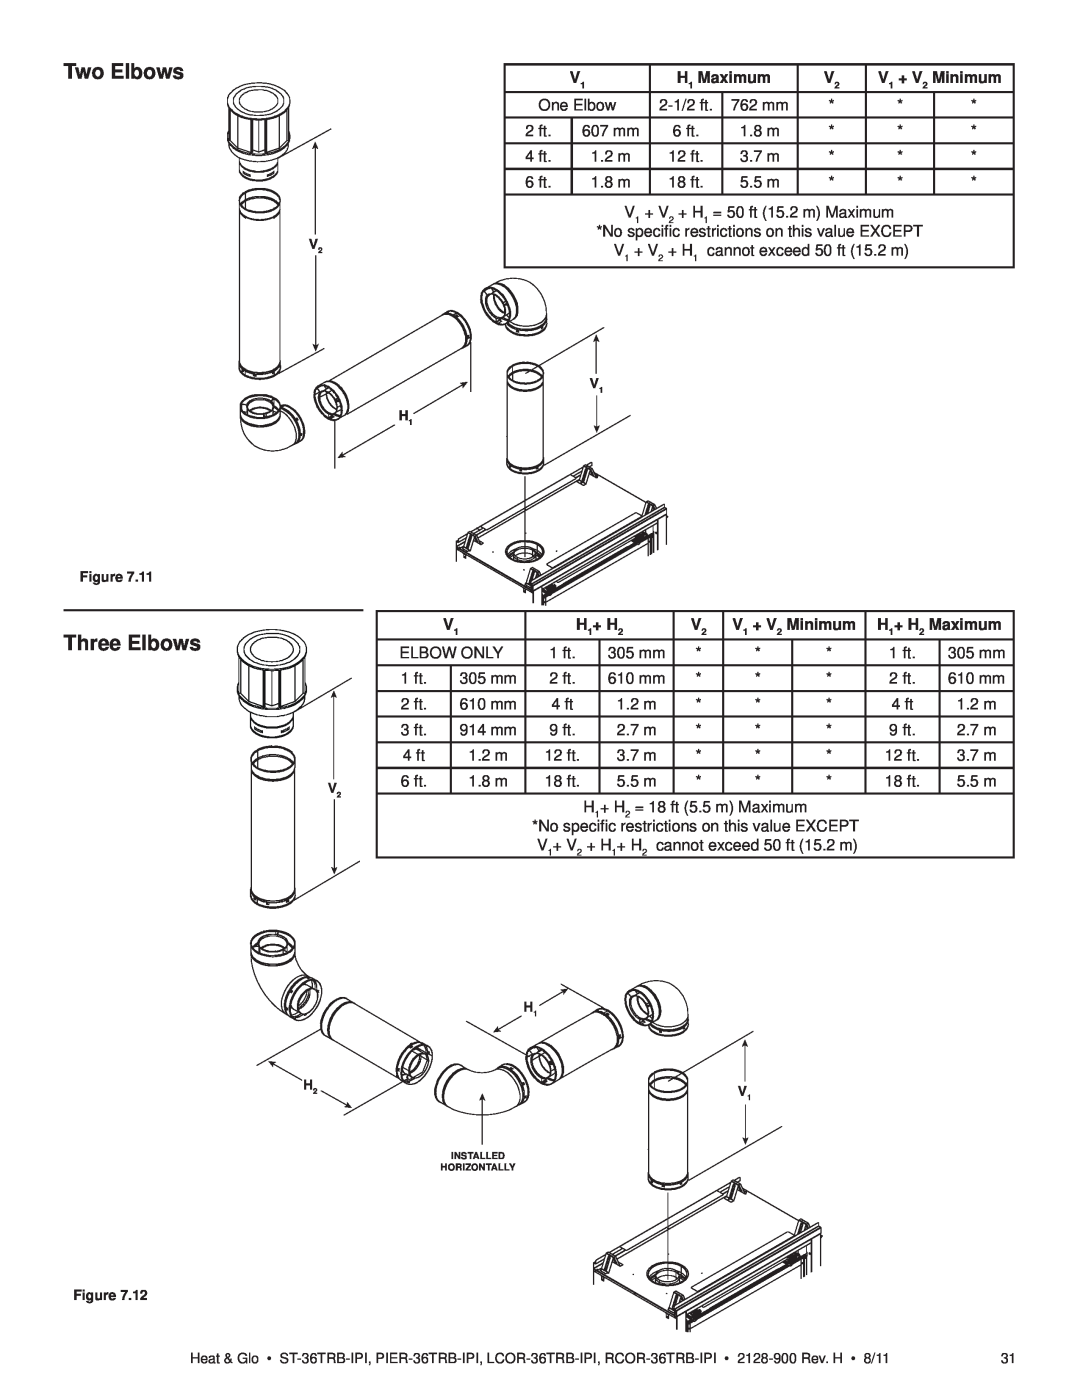 Heat & Glo LifeStyle ST-36TRB-IPI owner manual Two Elbows, Three Elbows, H1 Maximum, V1 + V2 Minimum, H1+ H2 Maximum 